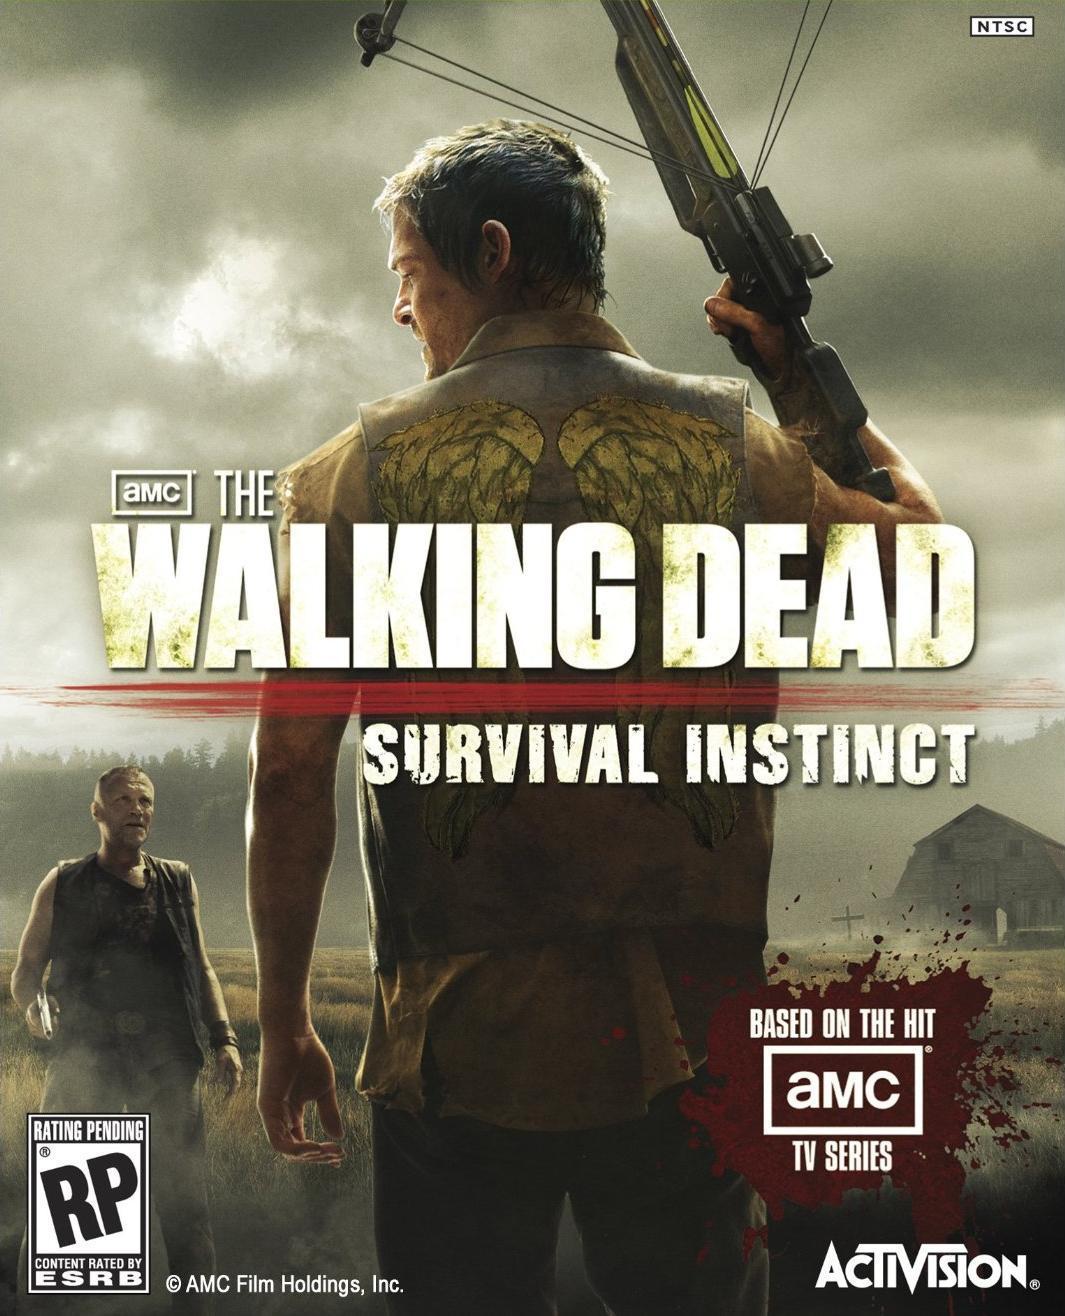 The walking dead survival instinct 2013 free download Of Games